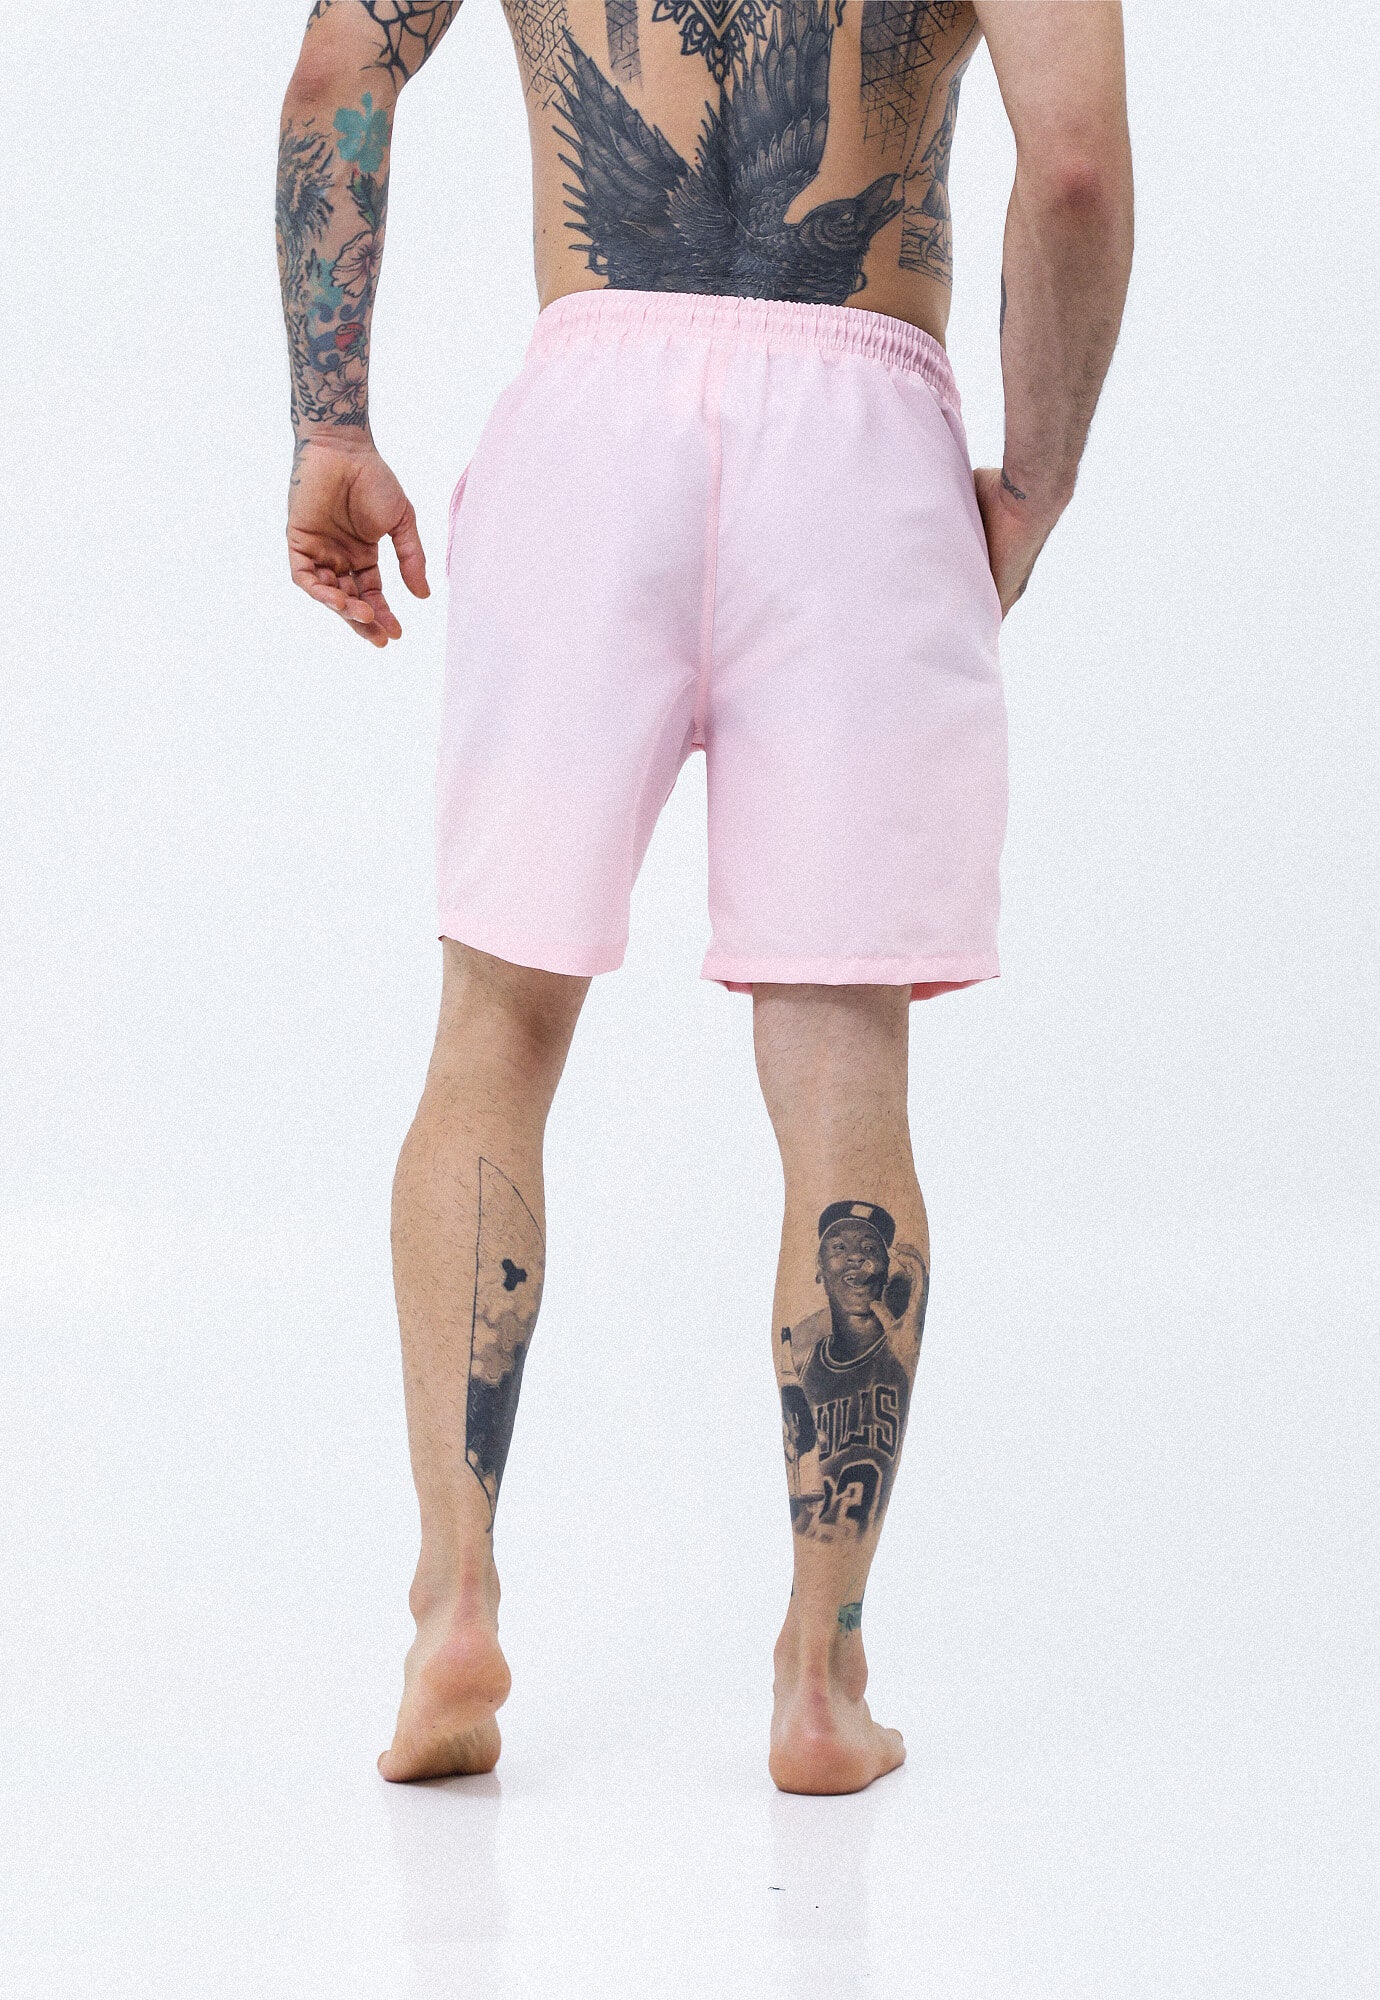 Pantaloneta playera rosado concha con bordado en bota y bolsillos laterales para hombre